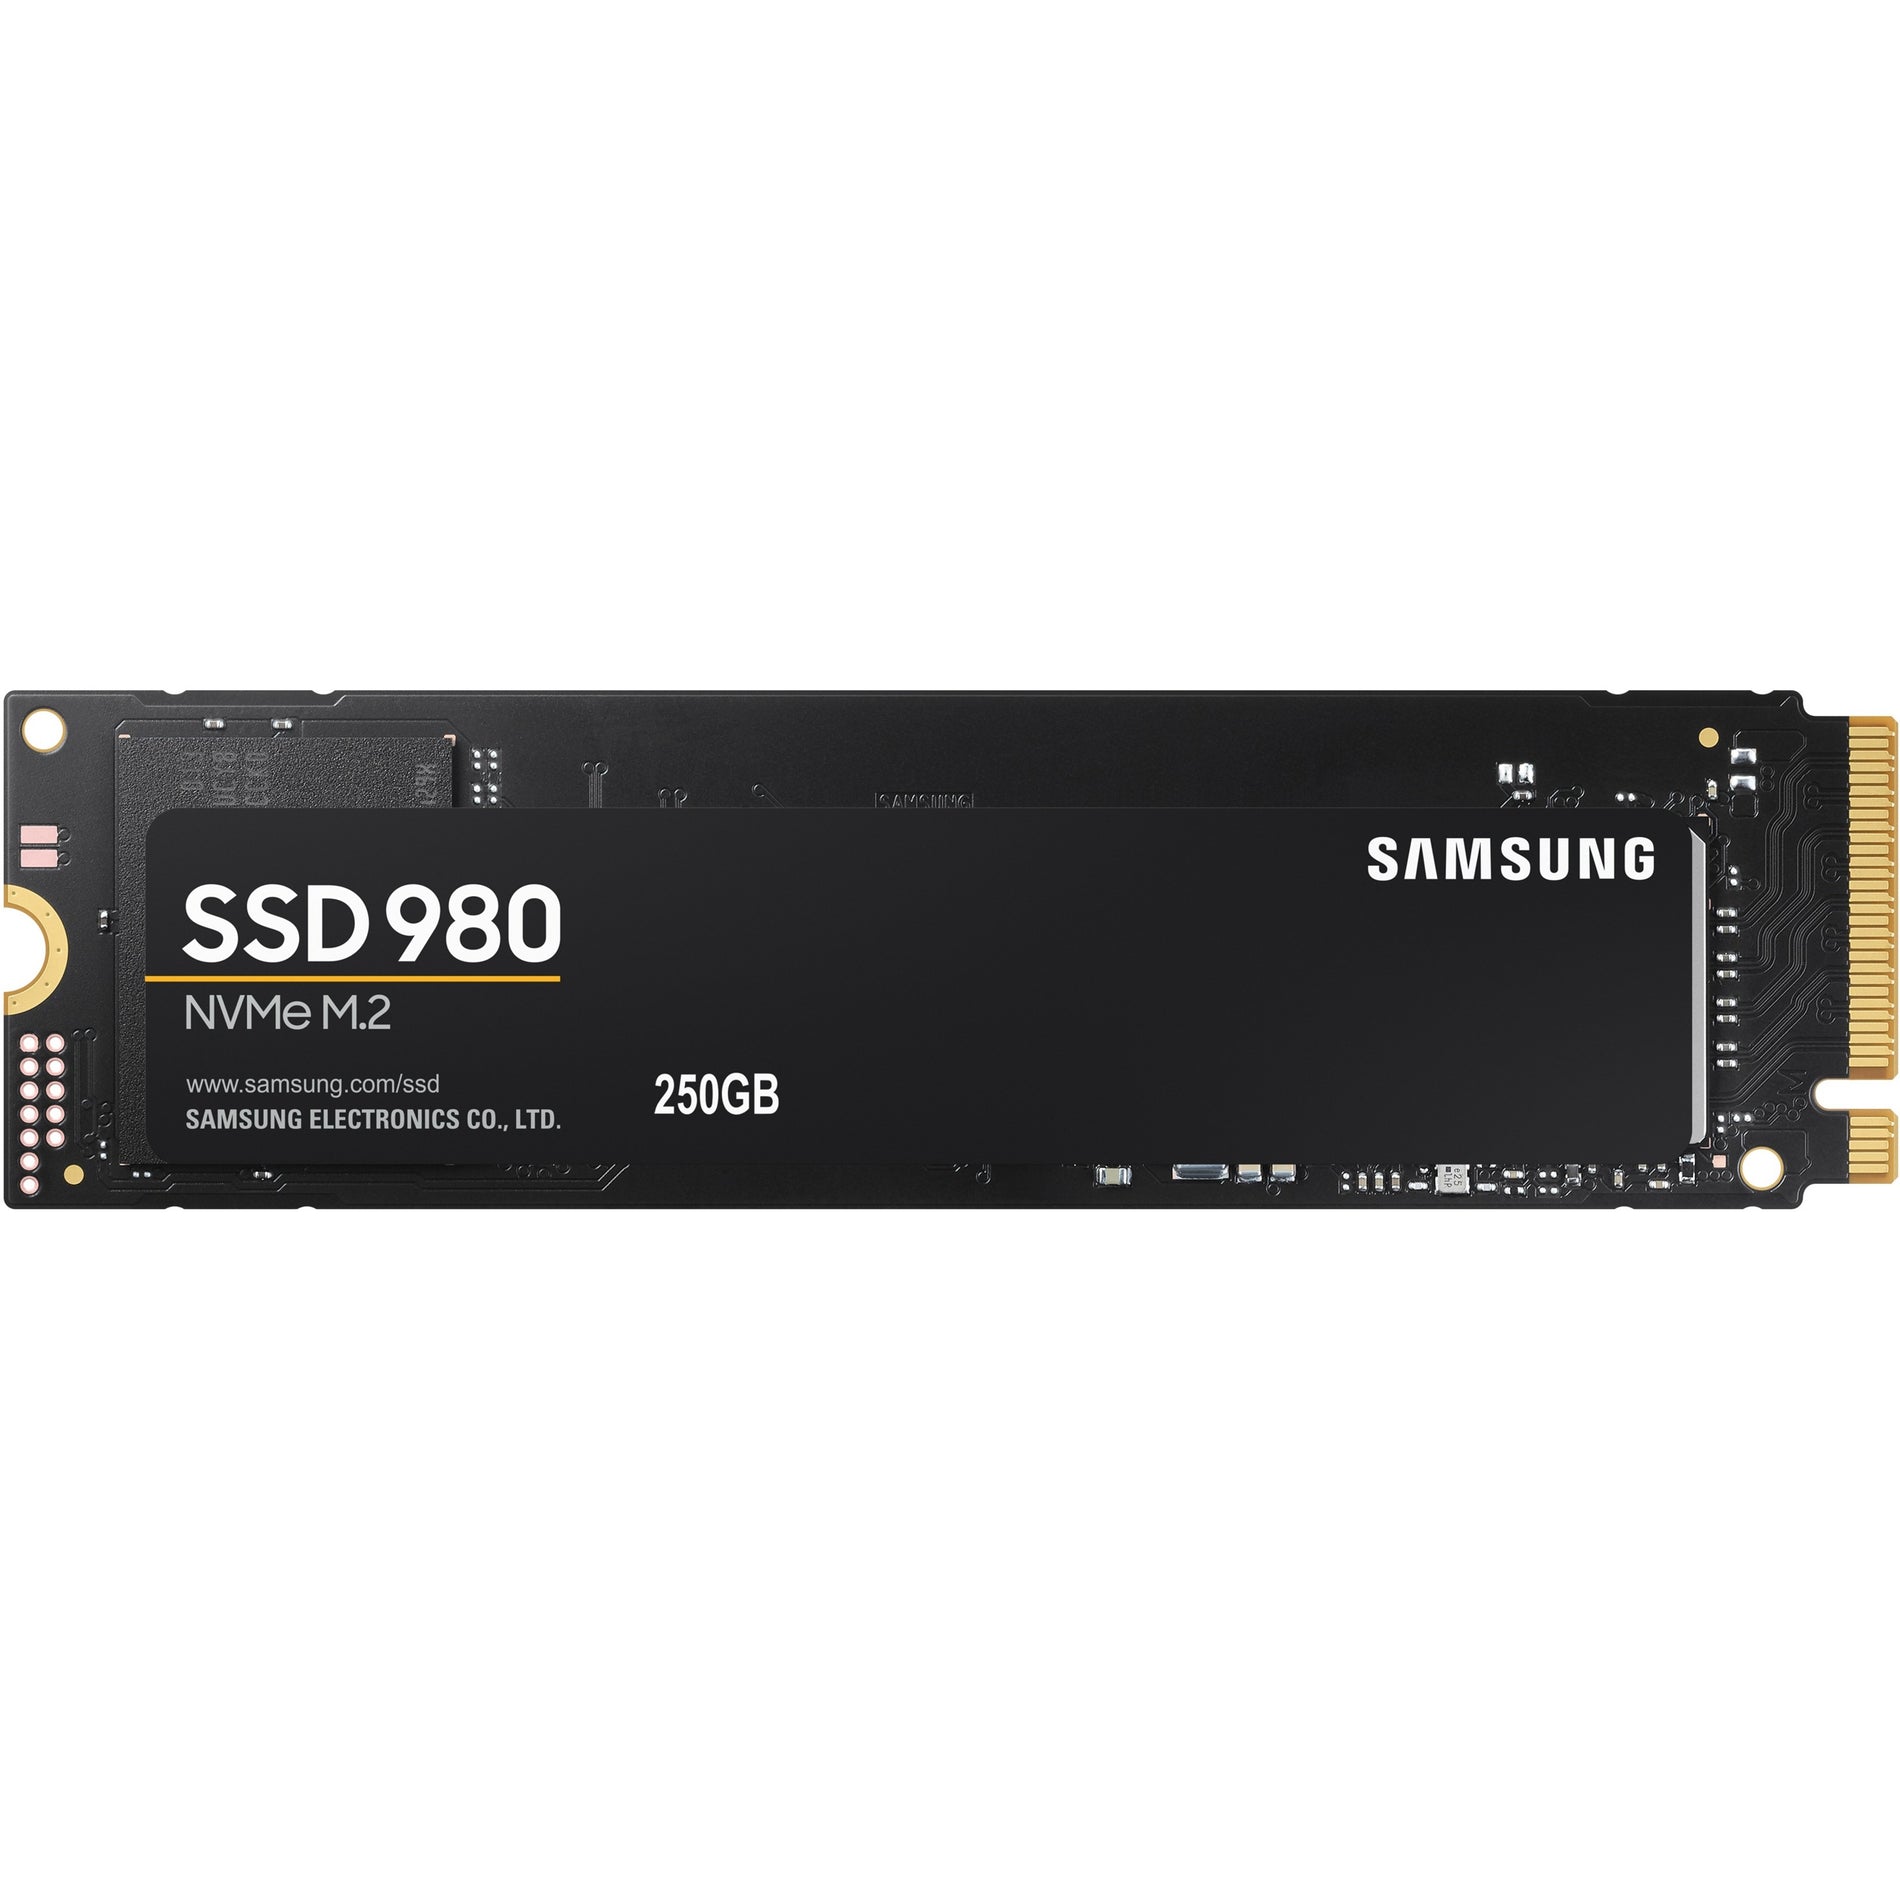 Samsung MZ-V8V250B/AM 980 PCIe 3.0 NVMe Gaming SSD 250GB, Fast Read/Write Speeds, 5-Year Warranty